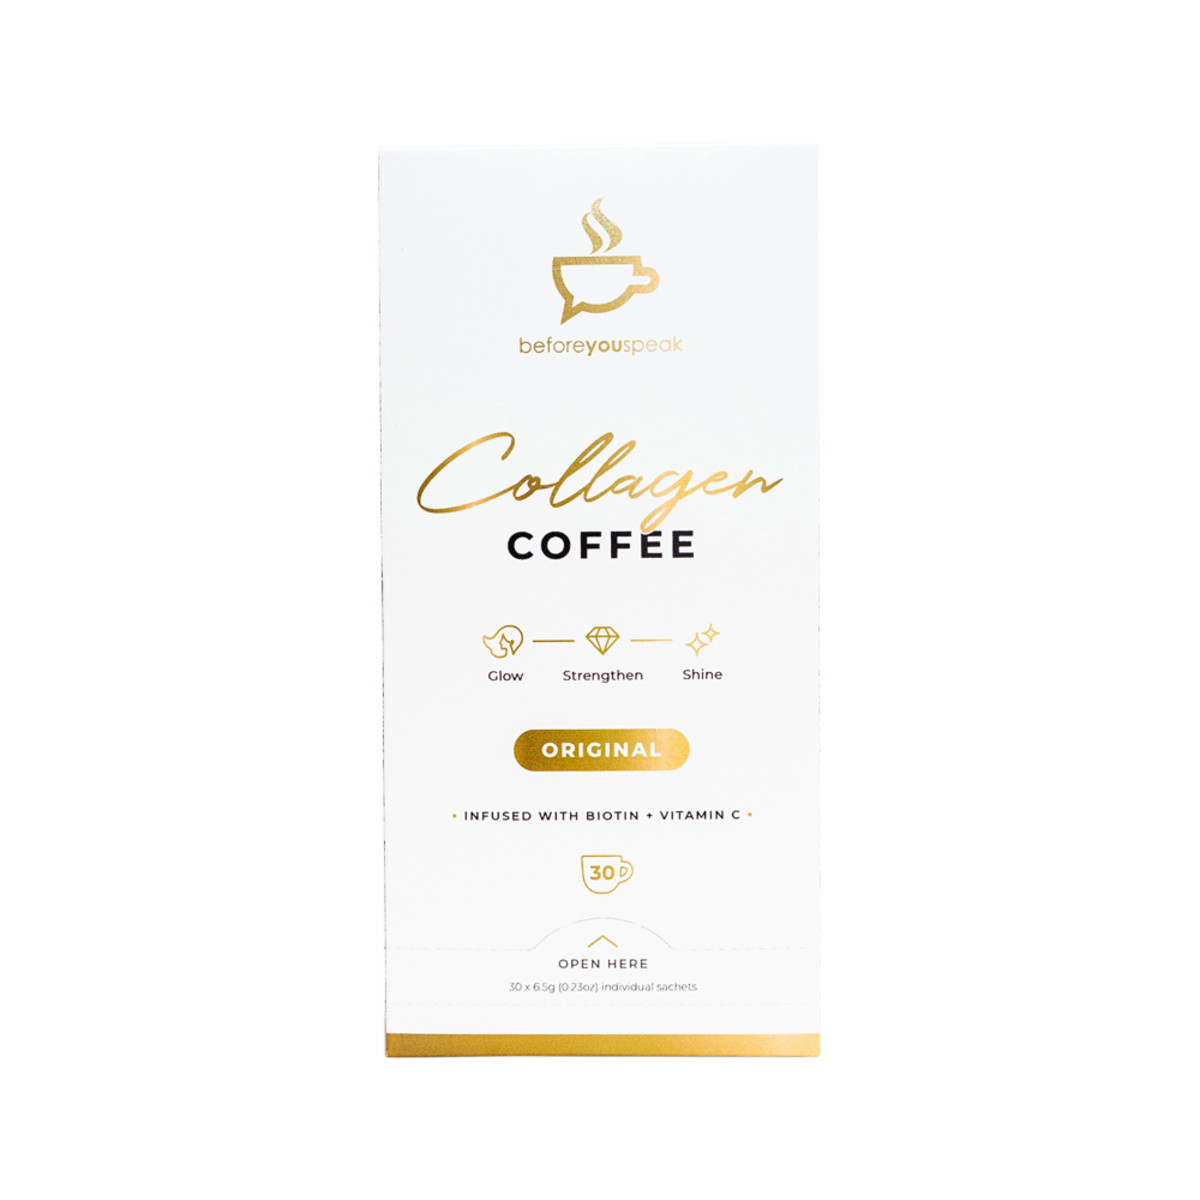 BEFORE YOU SPEAK - Collagen Coffee Original 30 Pack